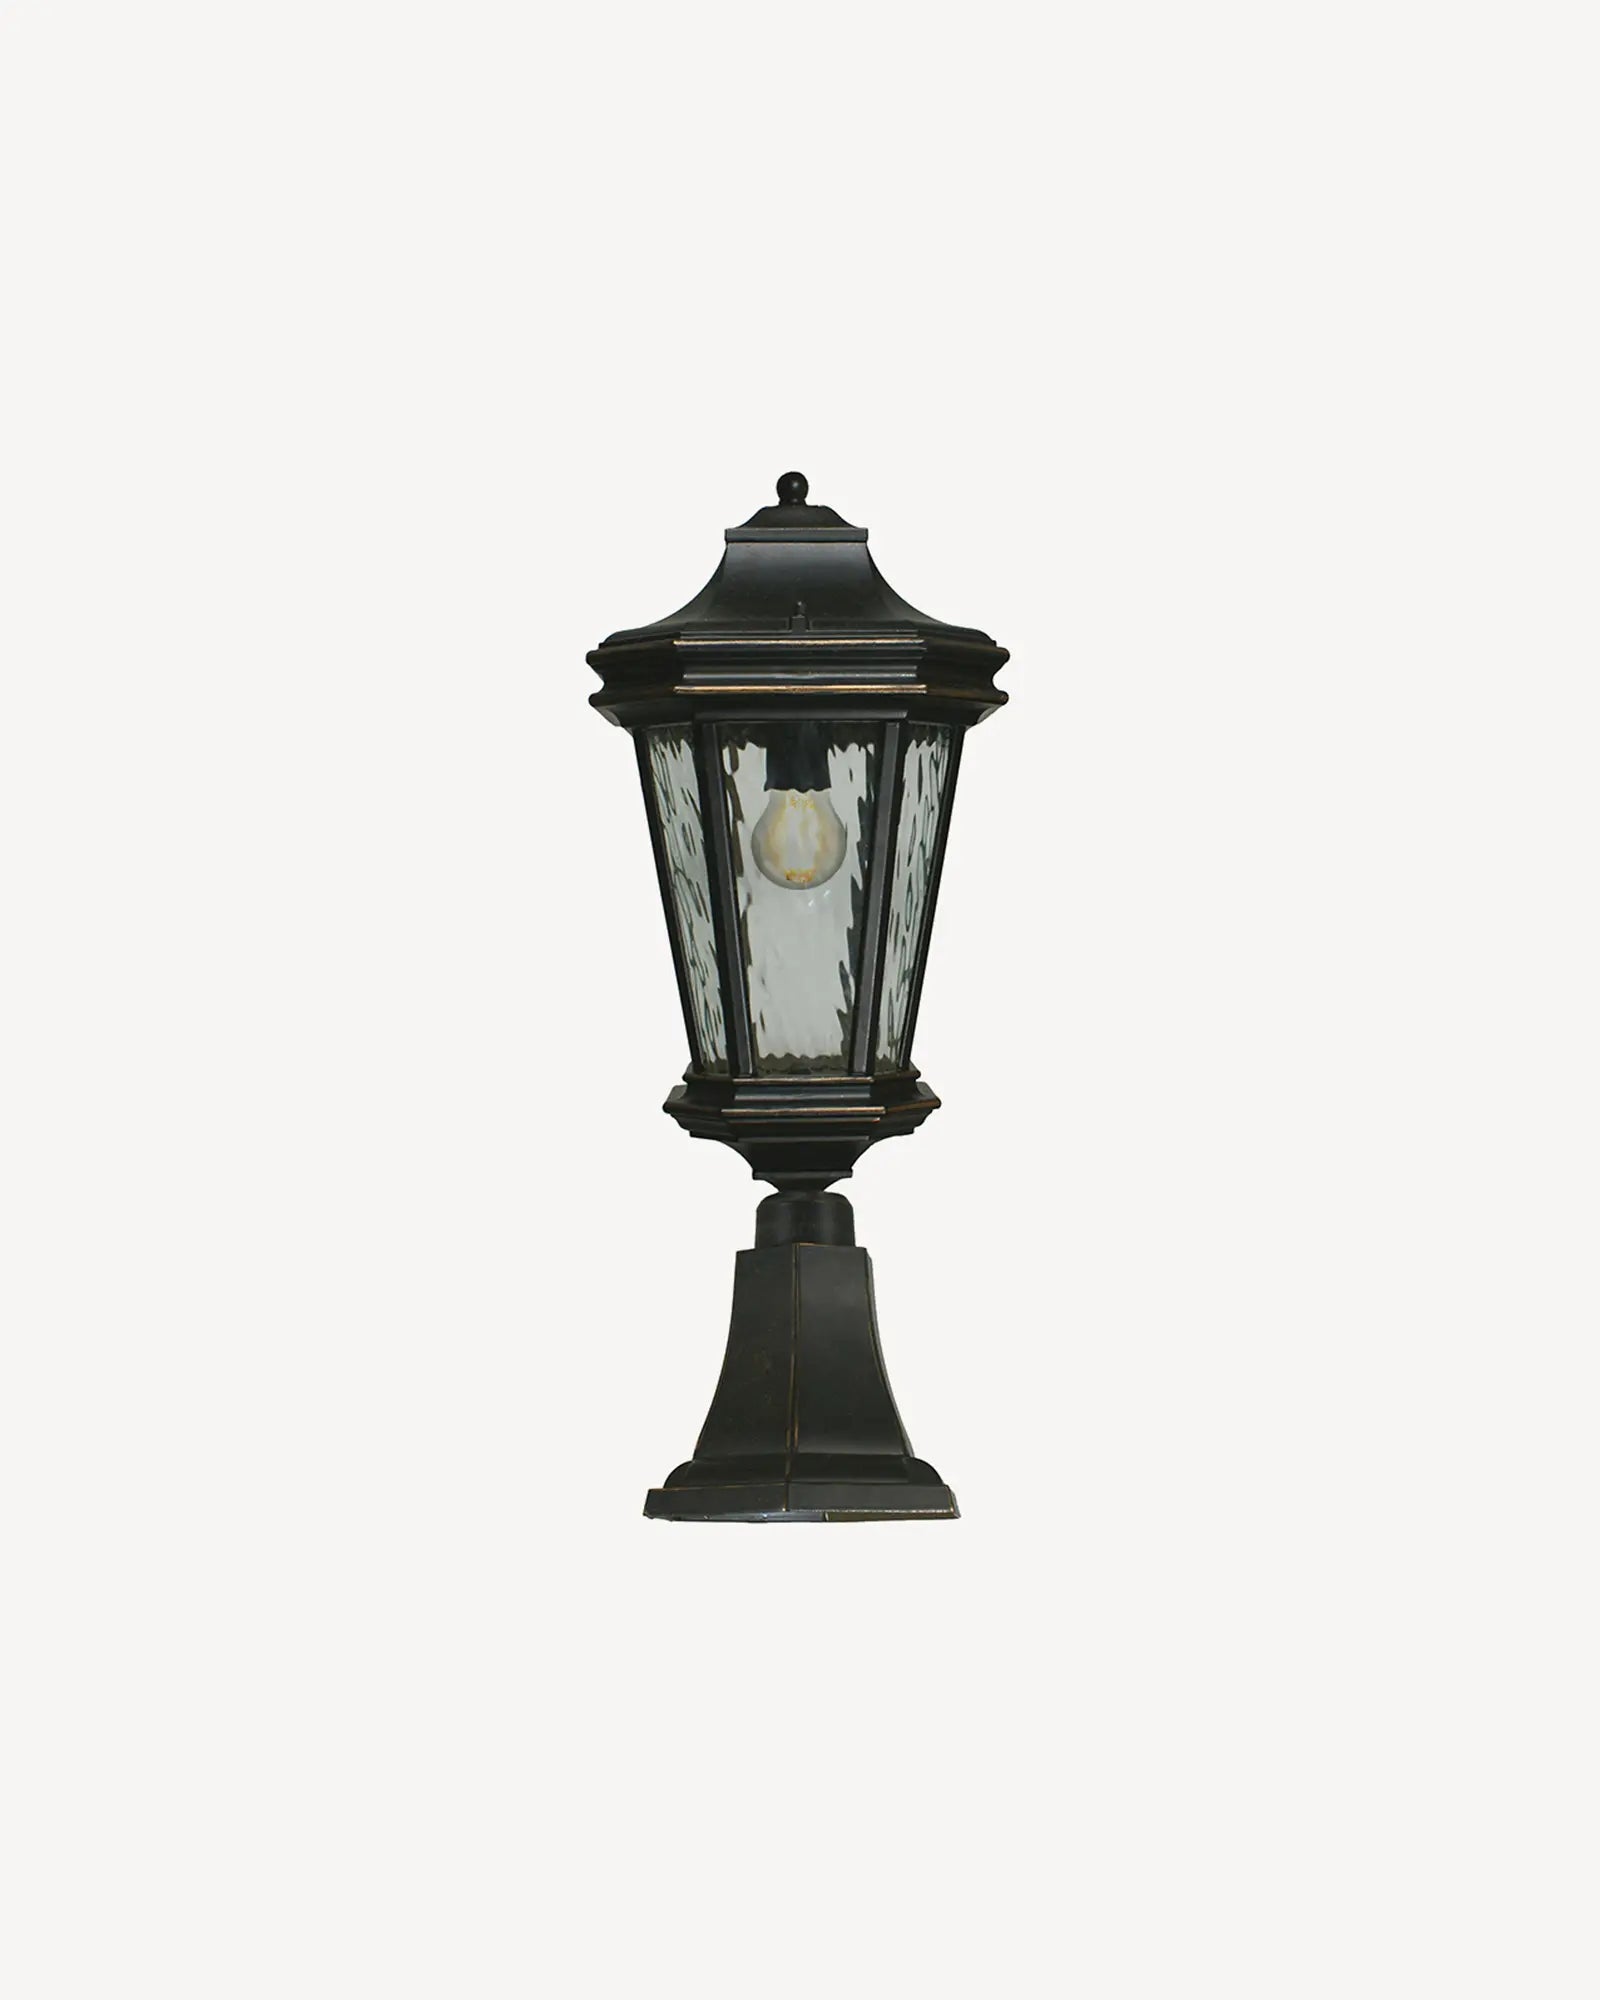 Tilburn Pedestal Light by Inspiration Light at Nook Collections